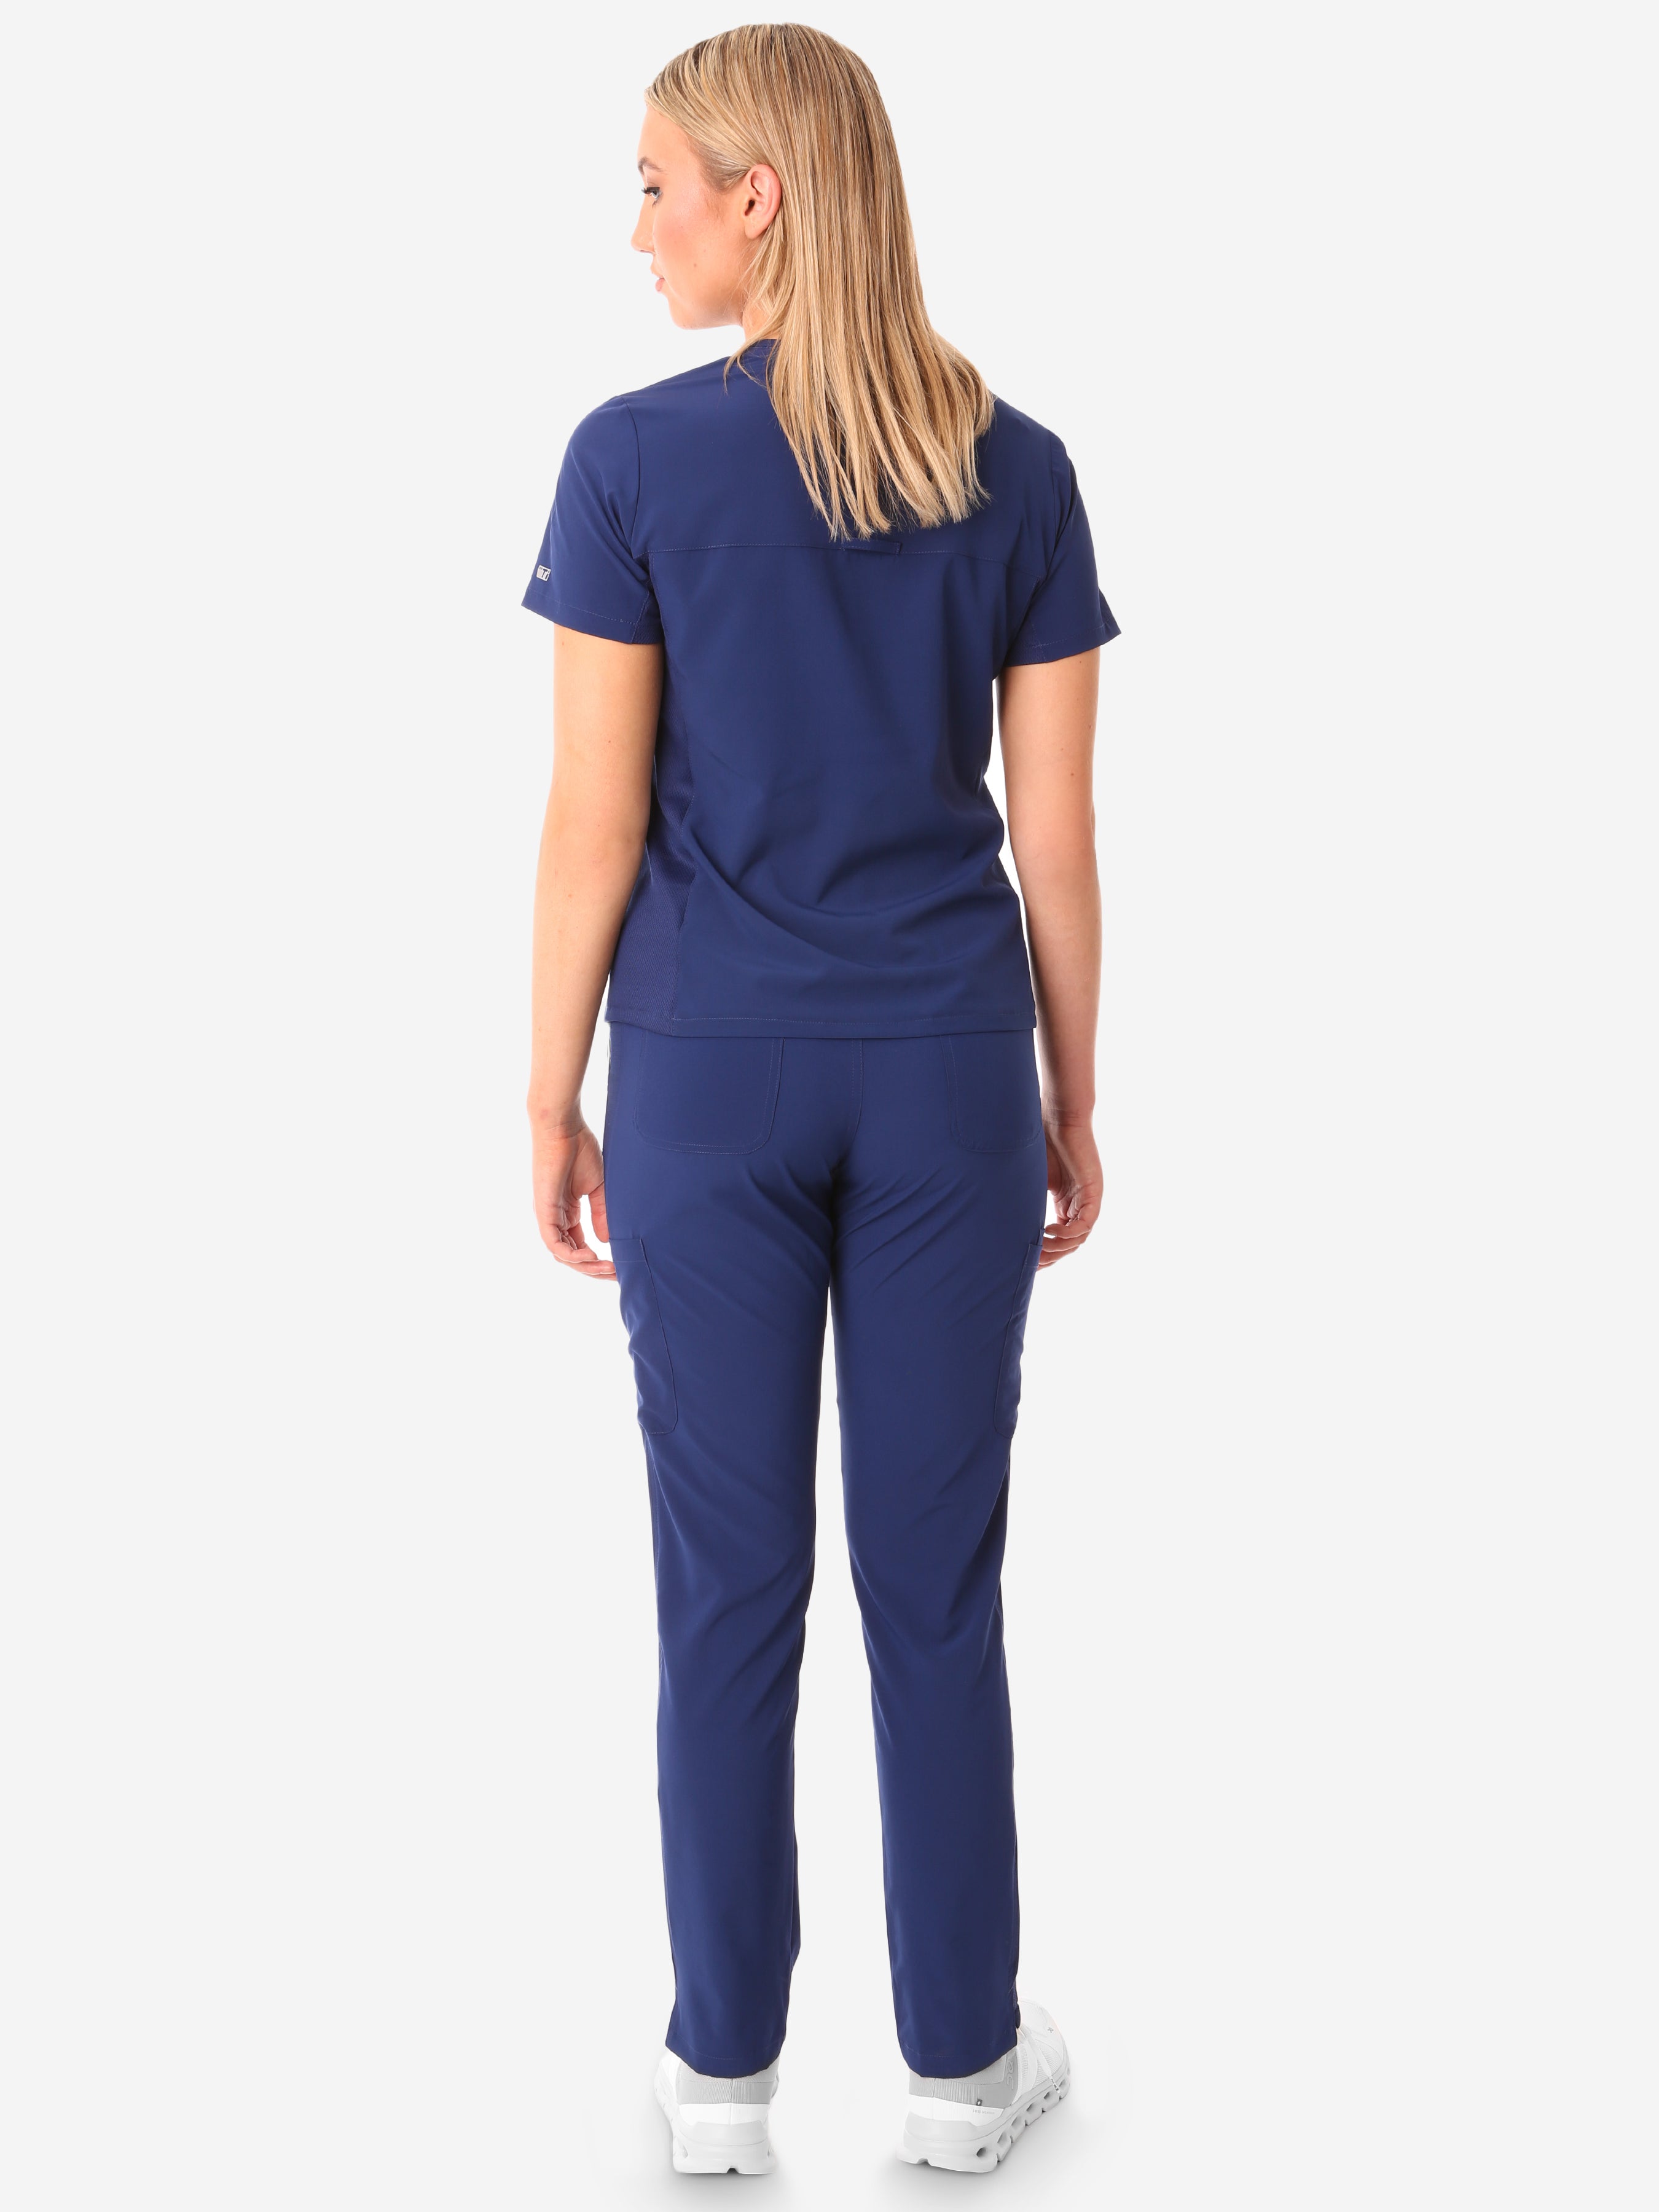 TiScrubs Stretch Women's Navy Blue Stash-Pocket Scrub Top + 9-Pocket Pants Full Body Back View